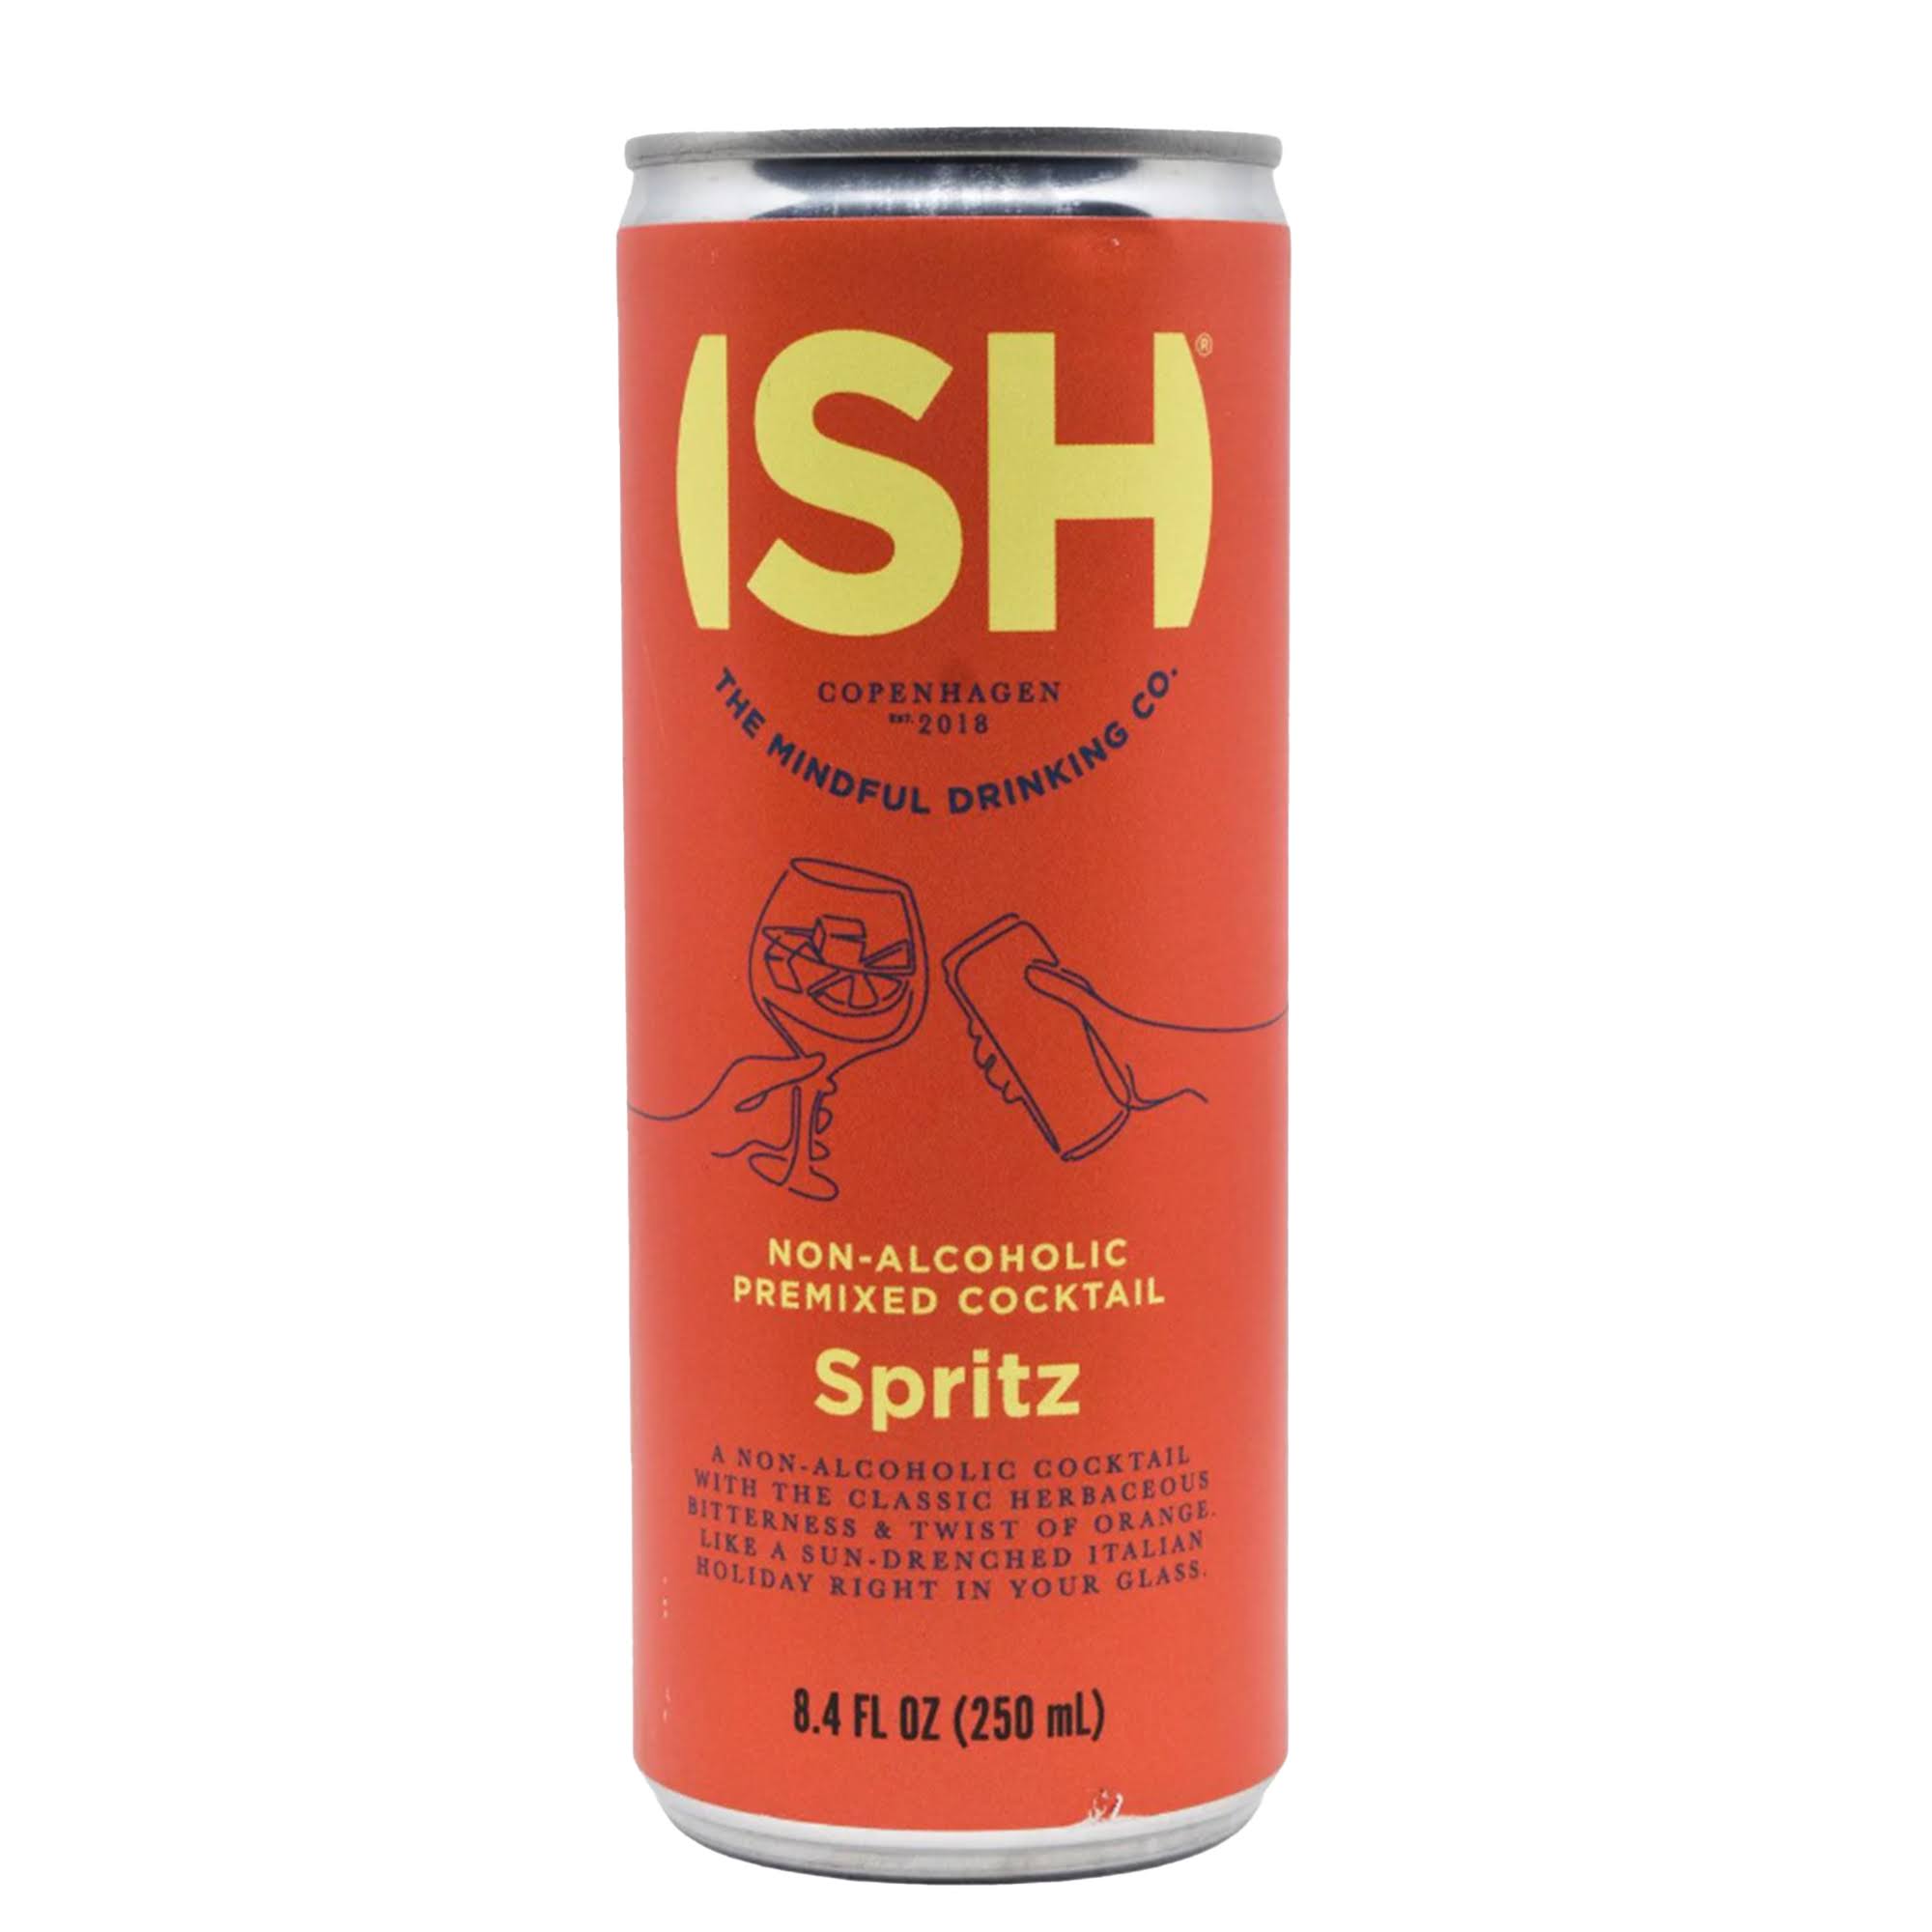 Ish Spritz Non-Alcoholic Premixed Cocktail (250 ml)